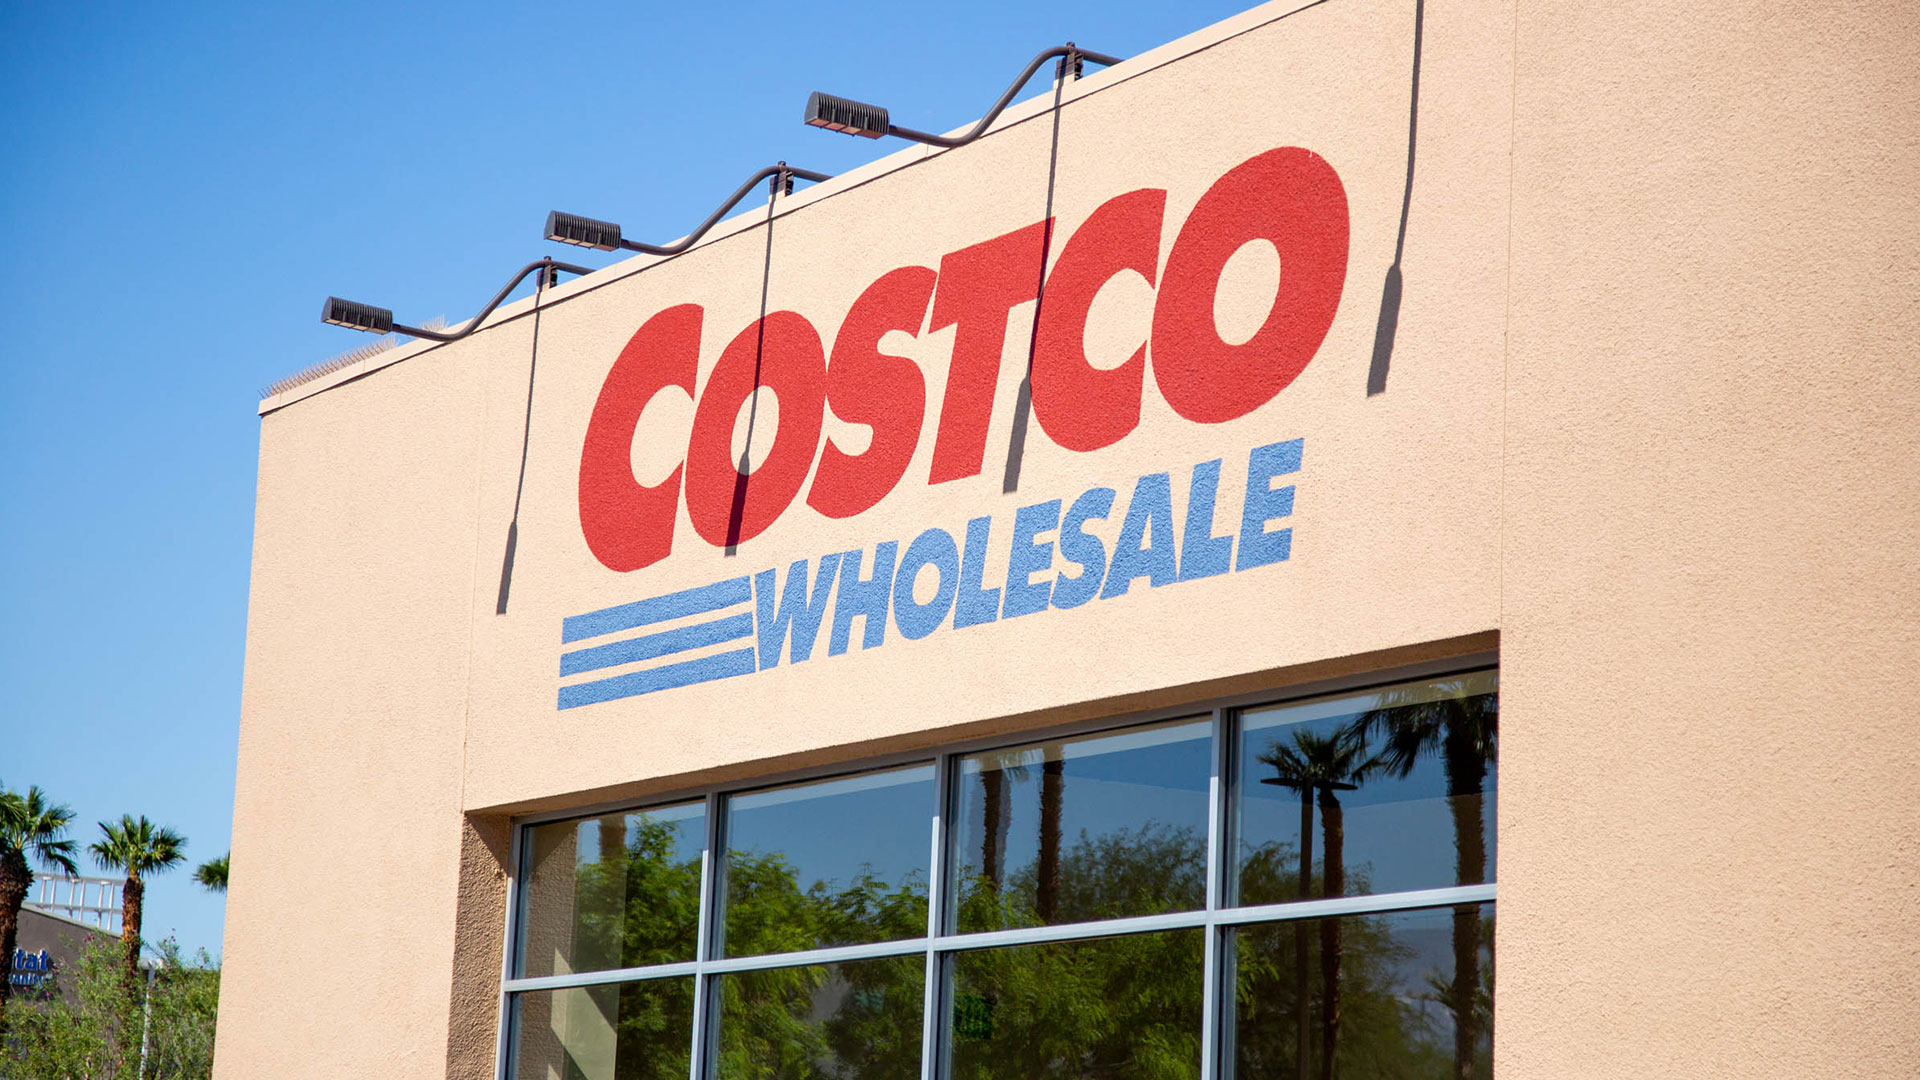 Costco coupon book |  (current deals and sales)